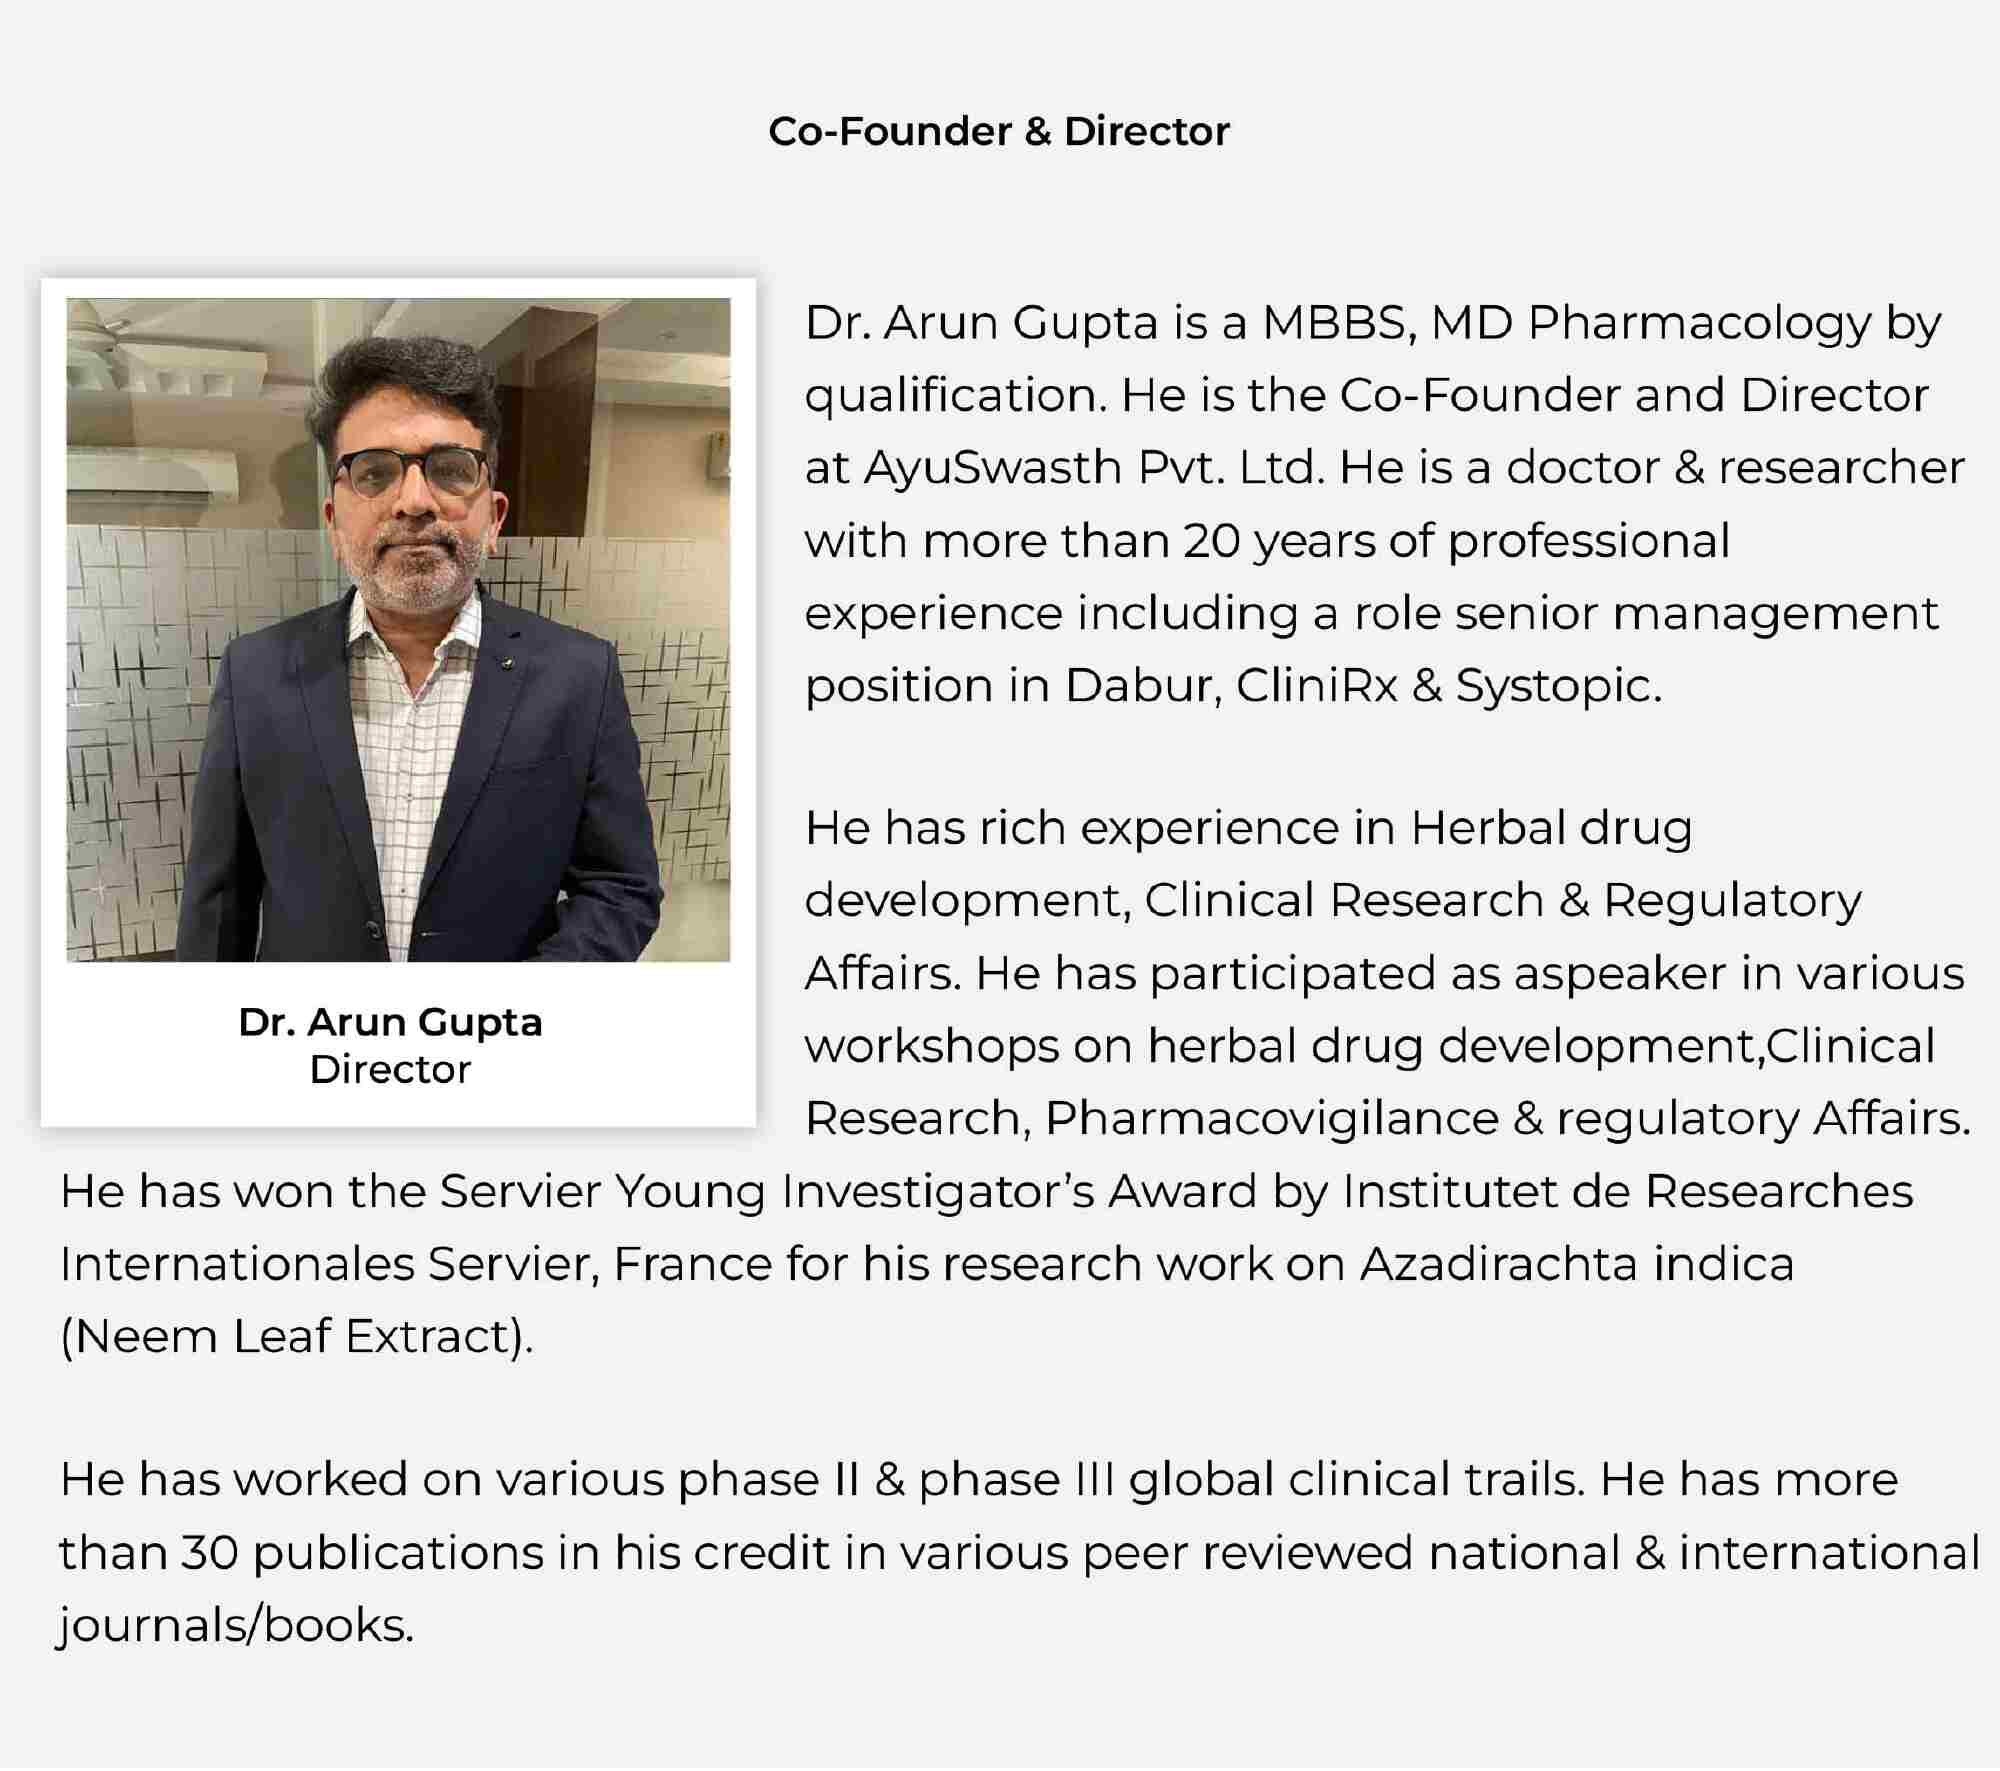 About Doctor Arun Gupta